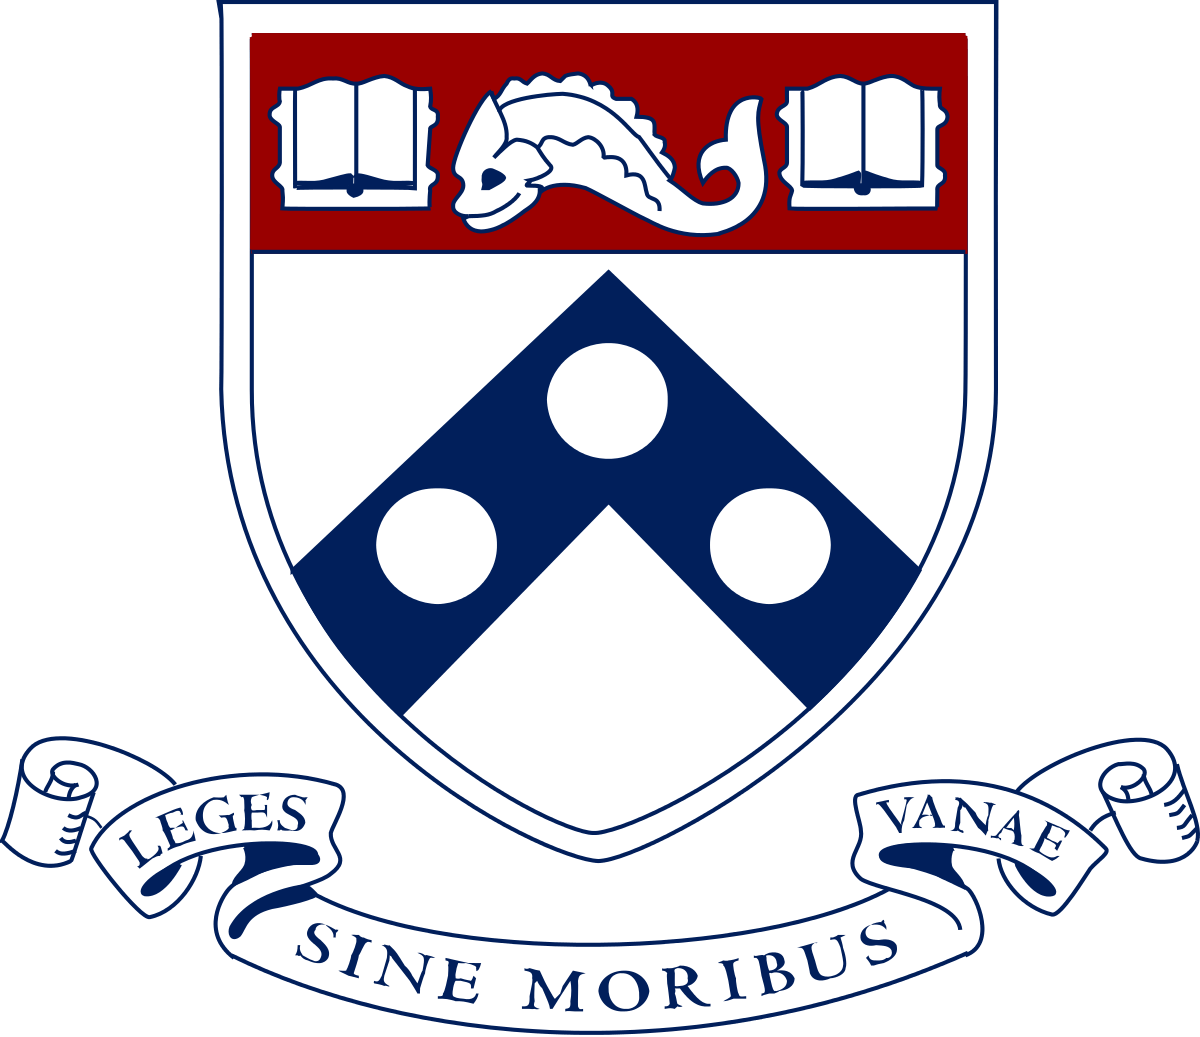 Penn Logo - University of Pennsylvania